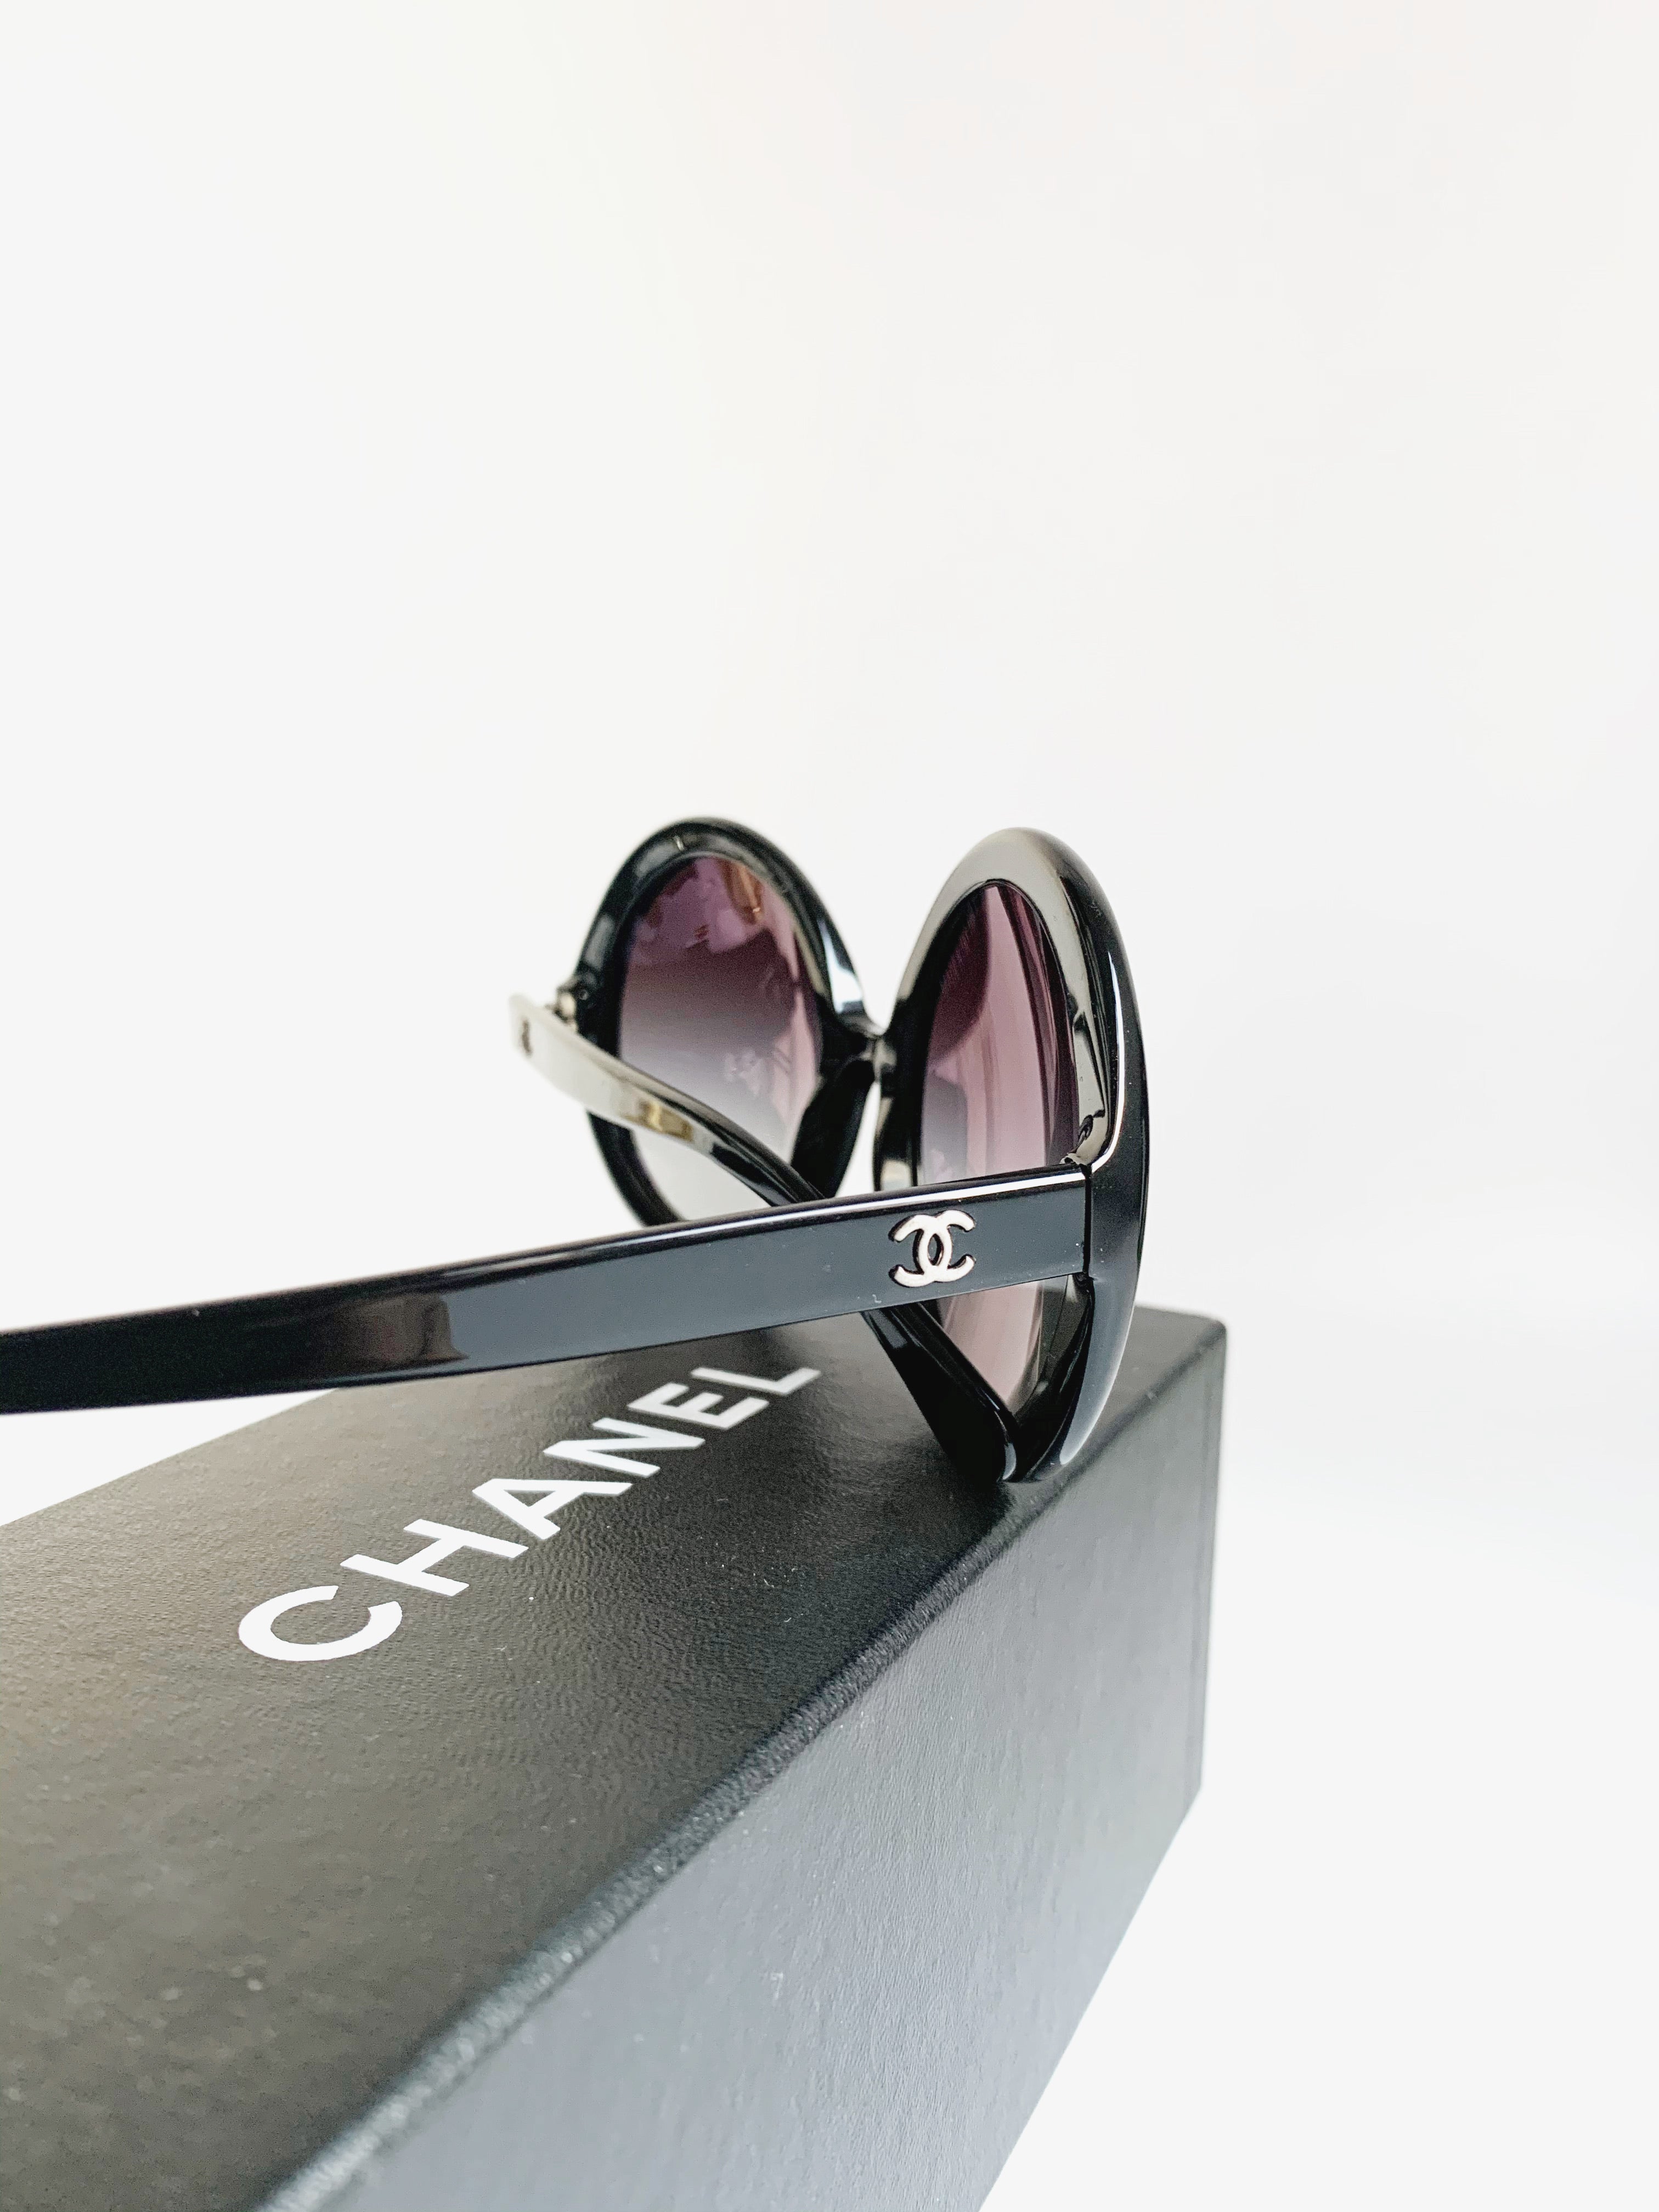 Police Auctions Canada - Chanel 3255 Prescription Eyeglasses (515253L)